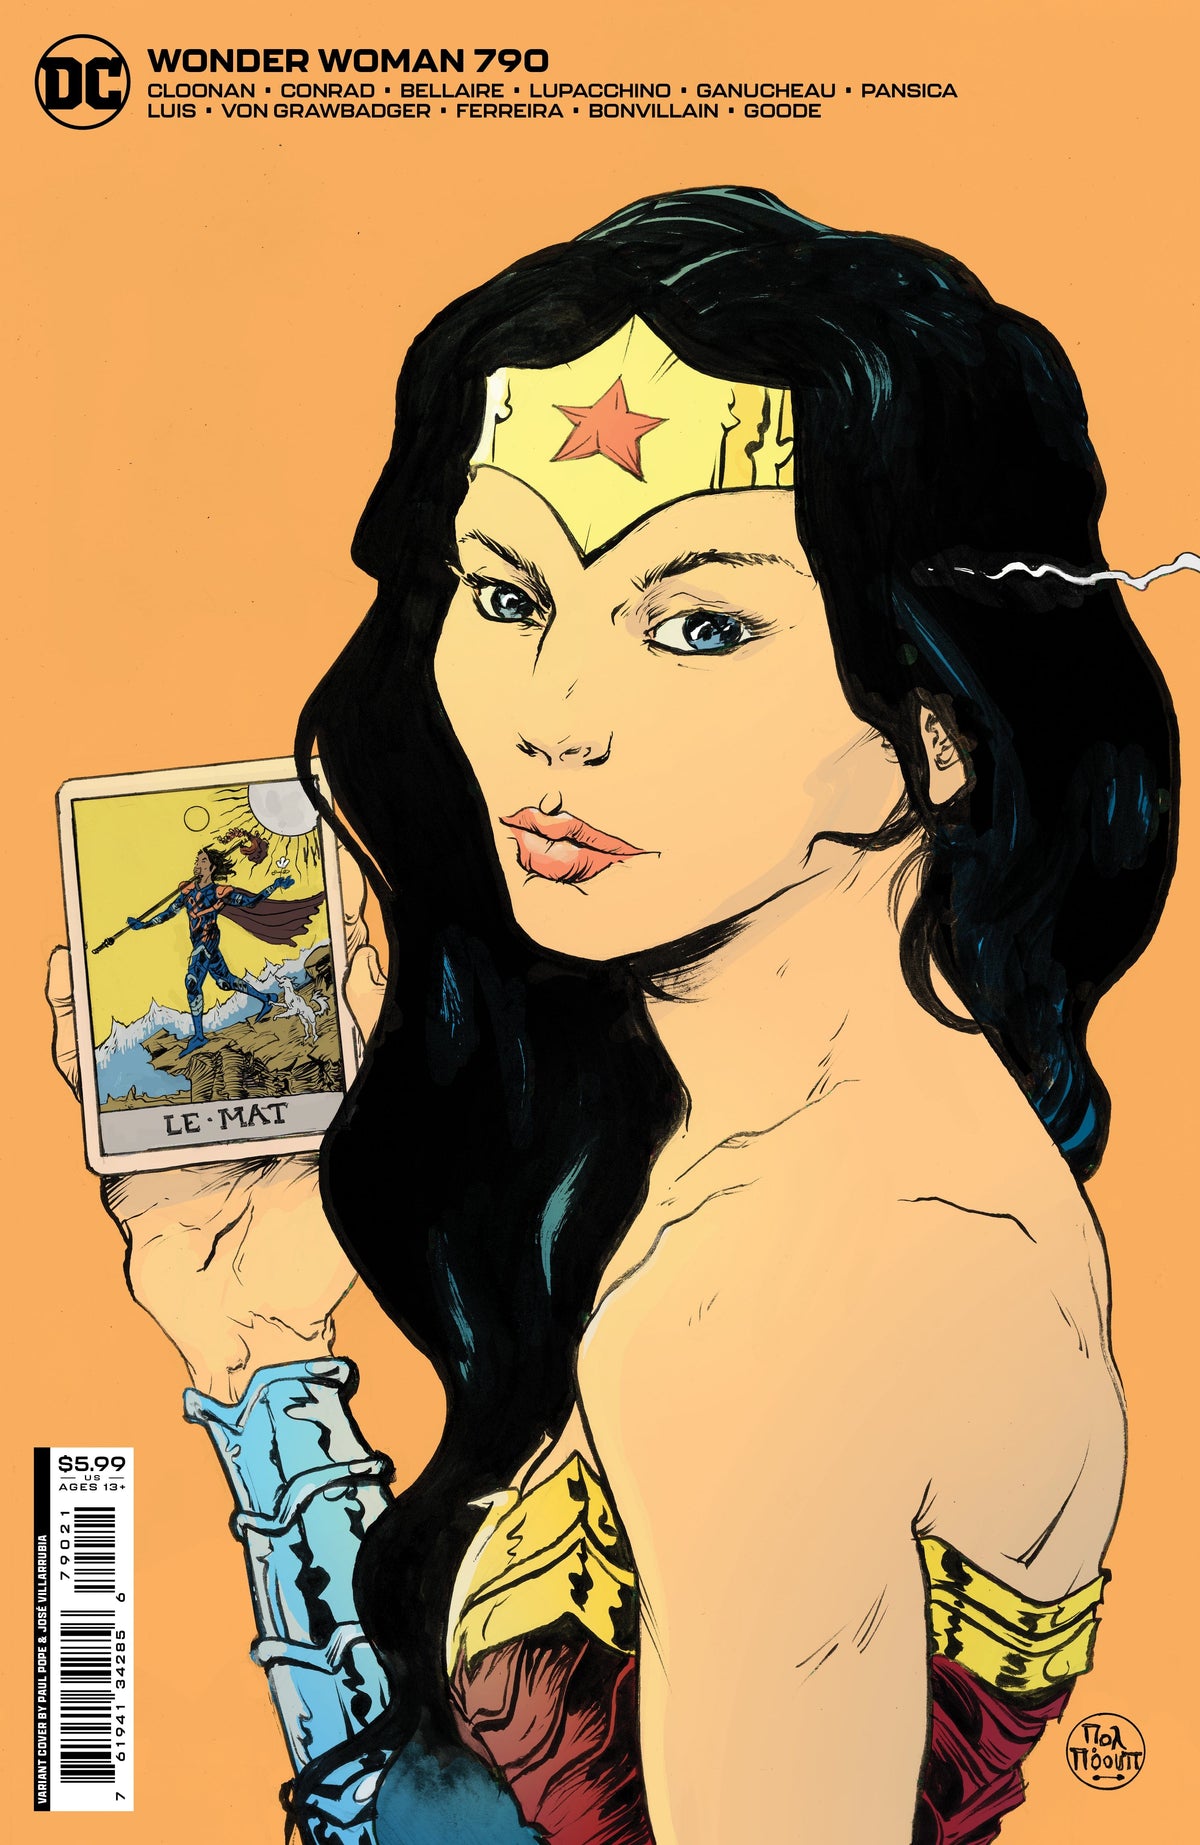 WONDER WOMAN #795 (DAVID NAKAYAMA VARIANT) COMIC BOOK ~ DC Comics ~ HOT